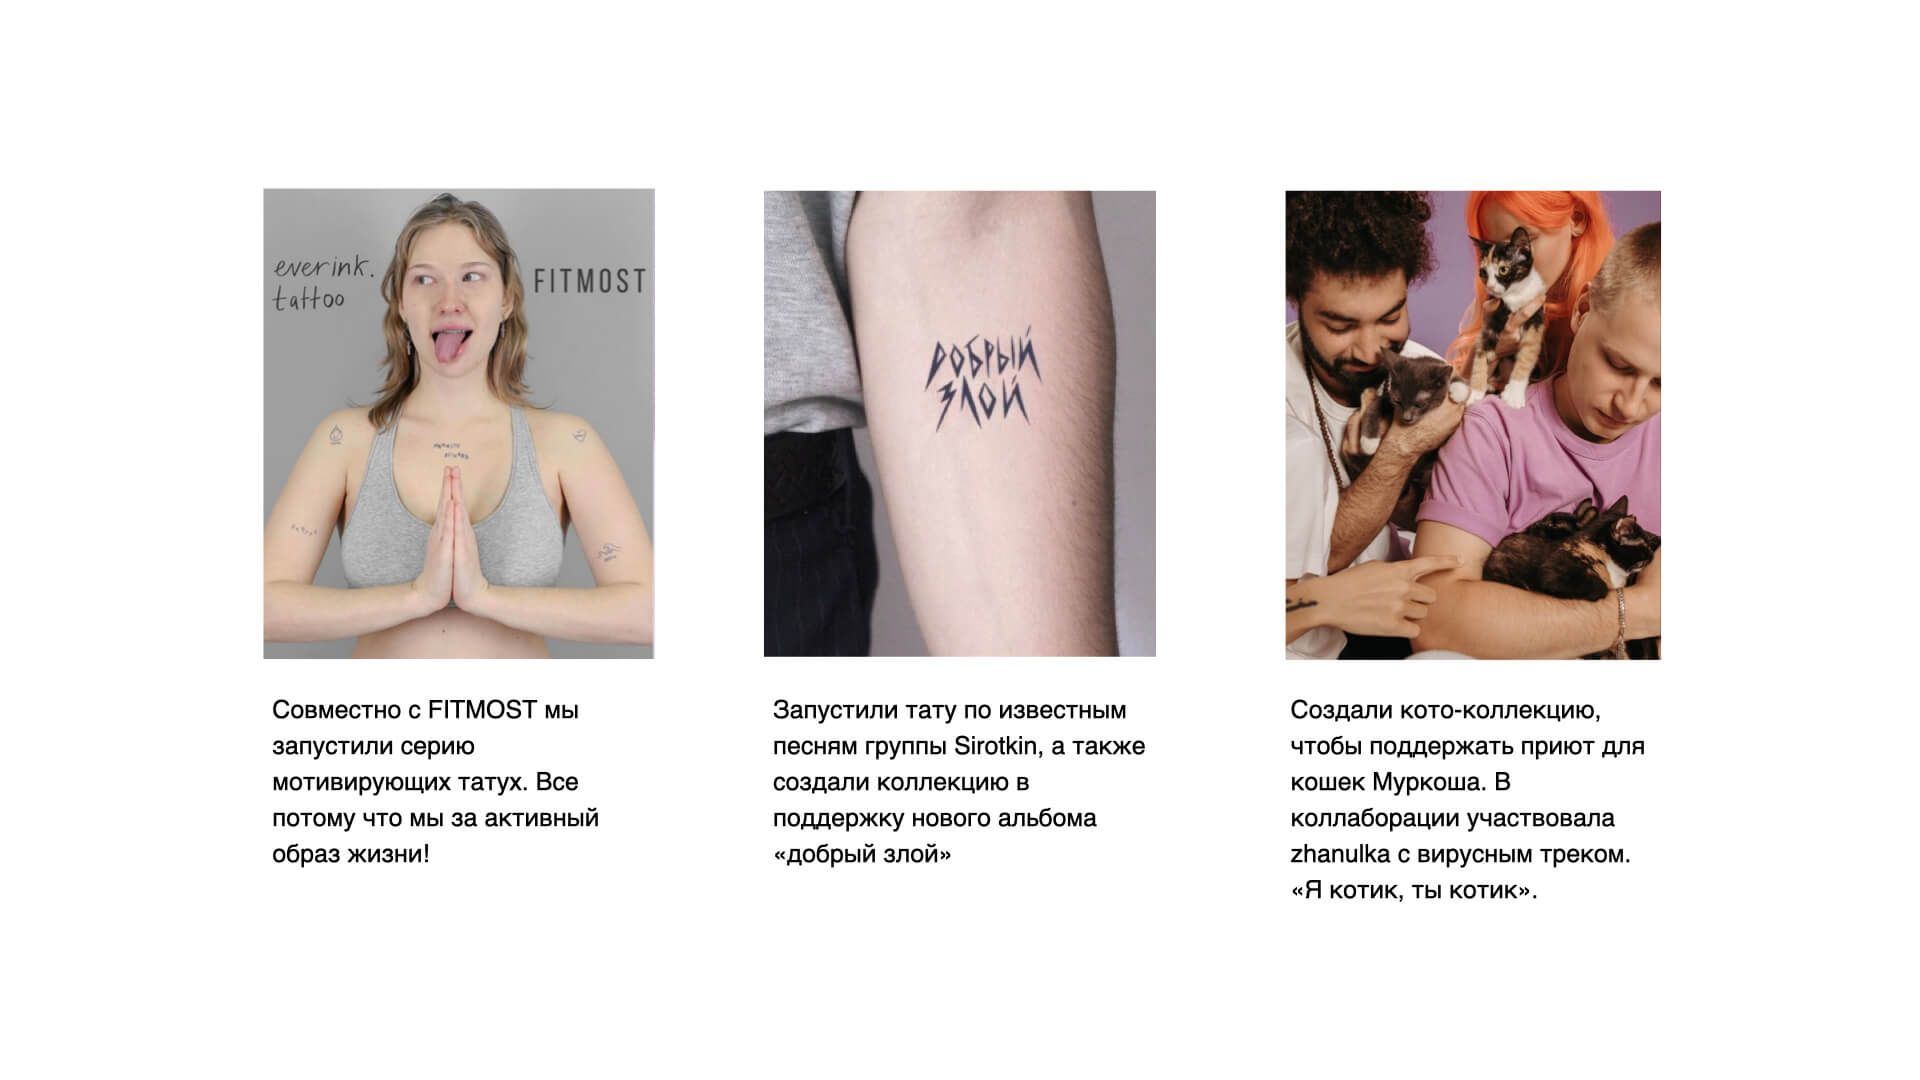 Каталог переводных тату - Miami Tattoos